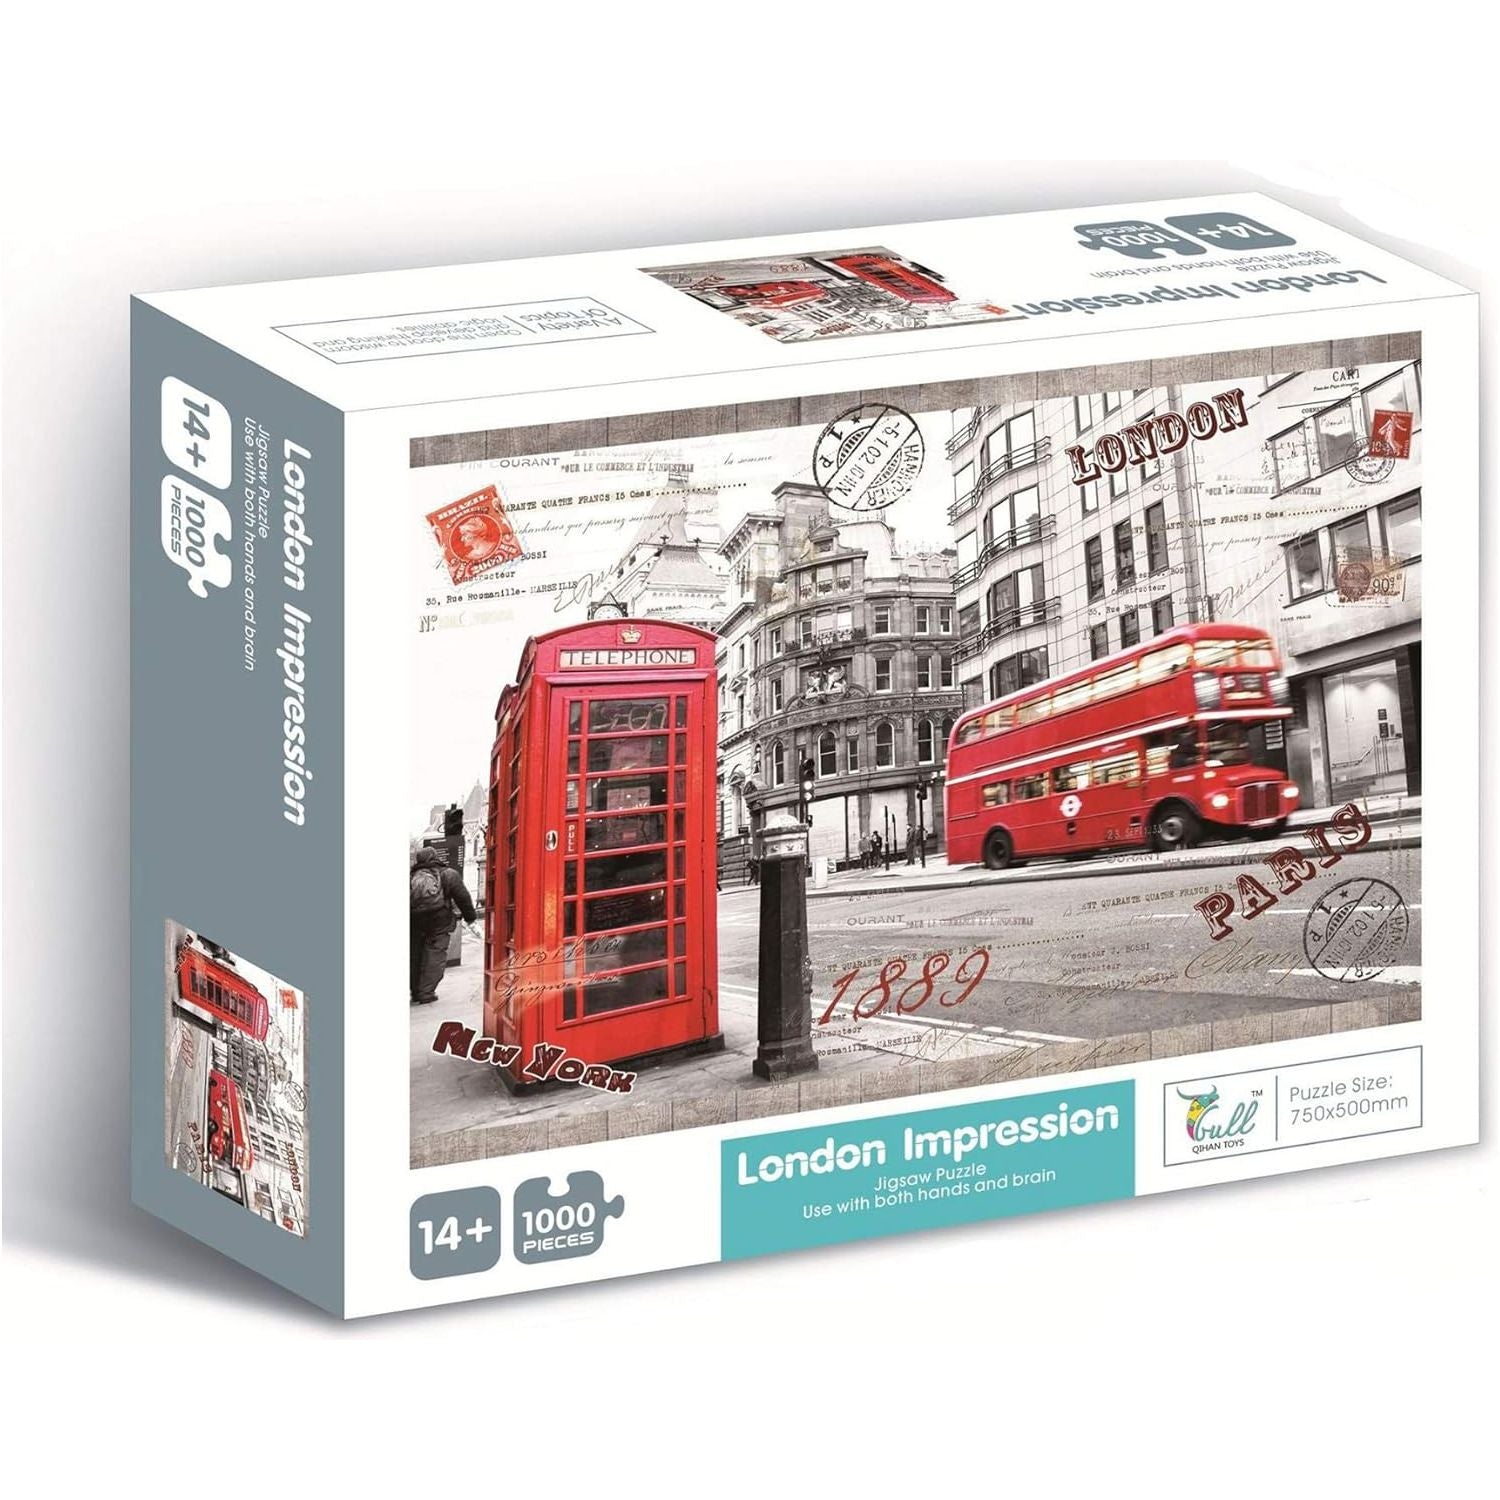 London Impressions Jigsaw Puzzle - 1000 Pieces